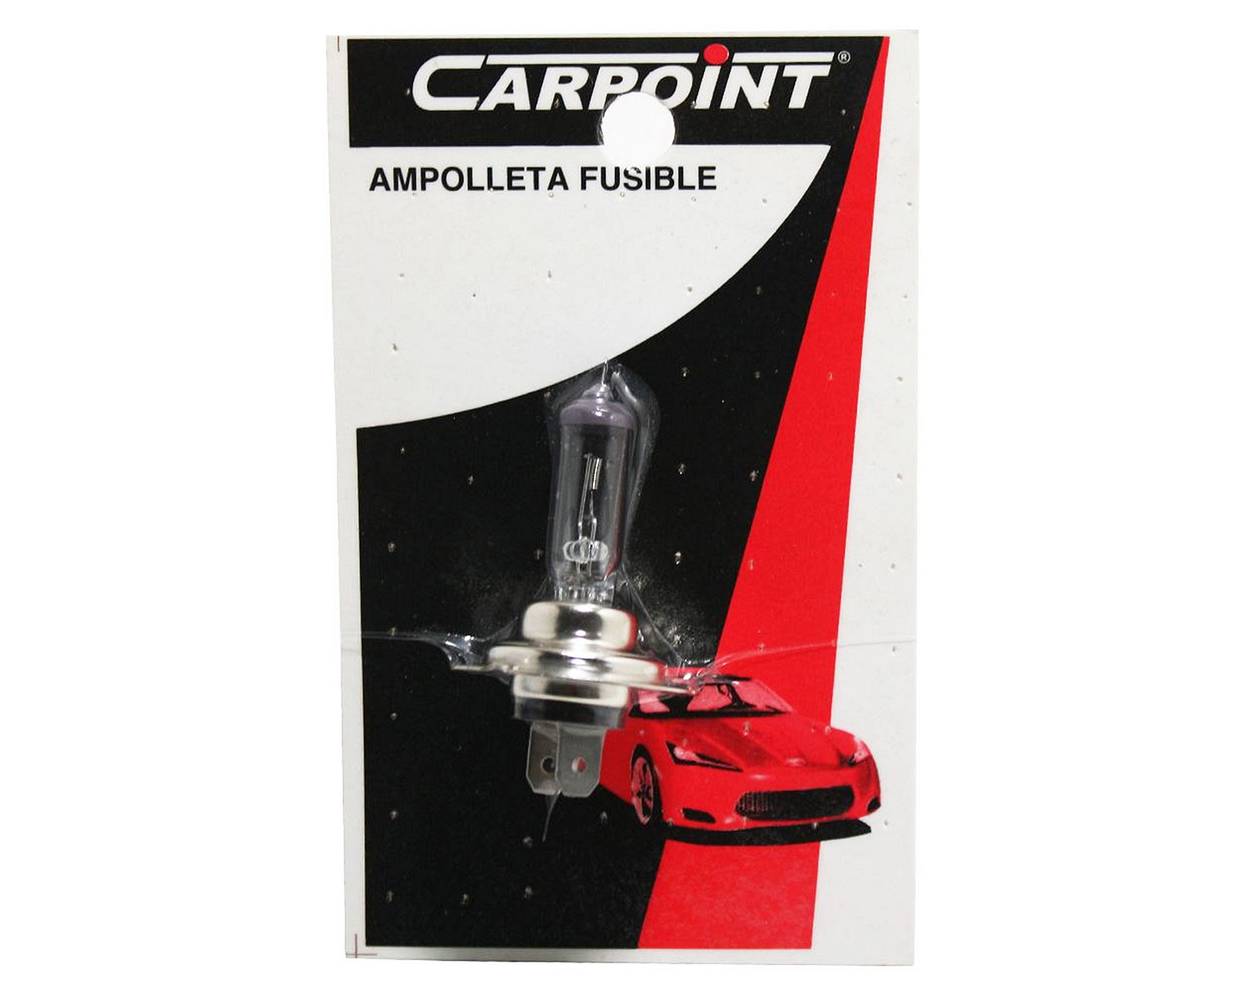 Ampolleta fusible 55w h7 carpoint